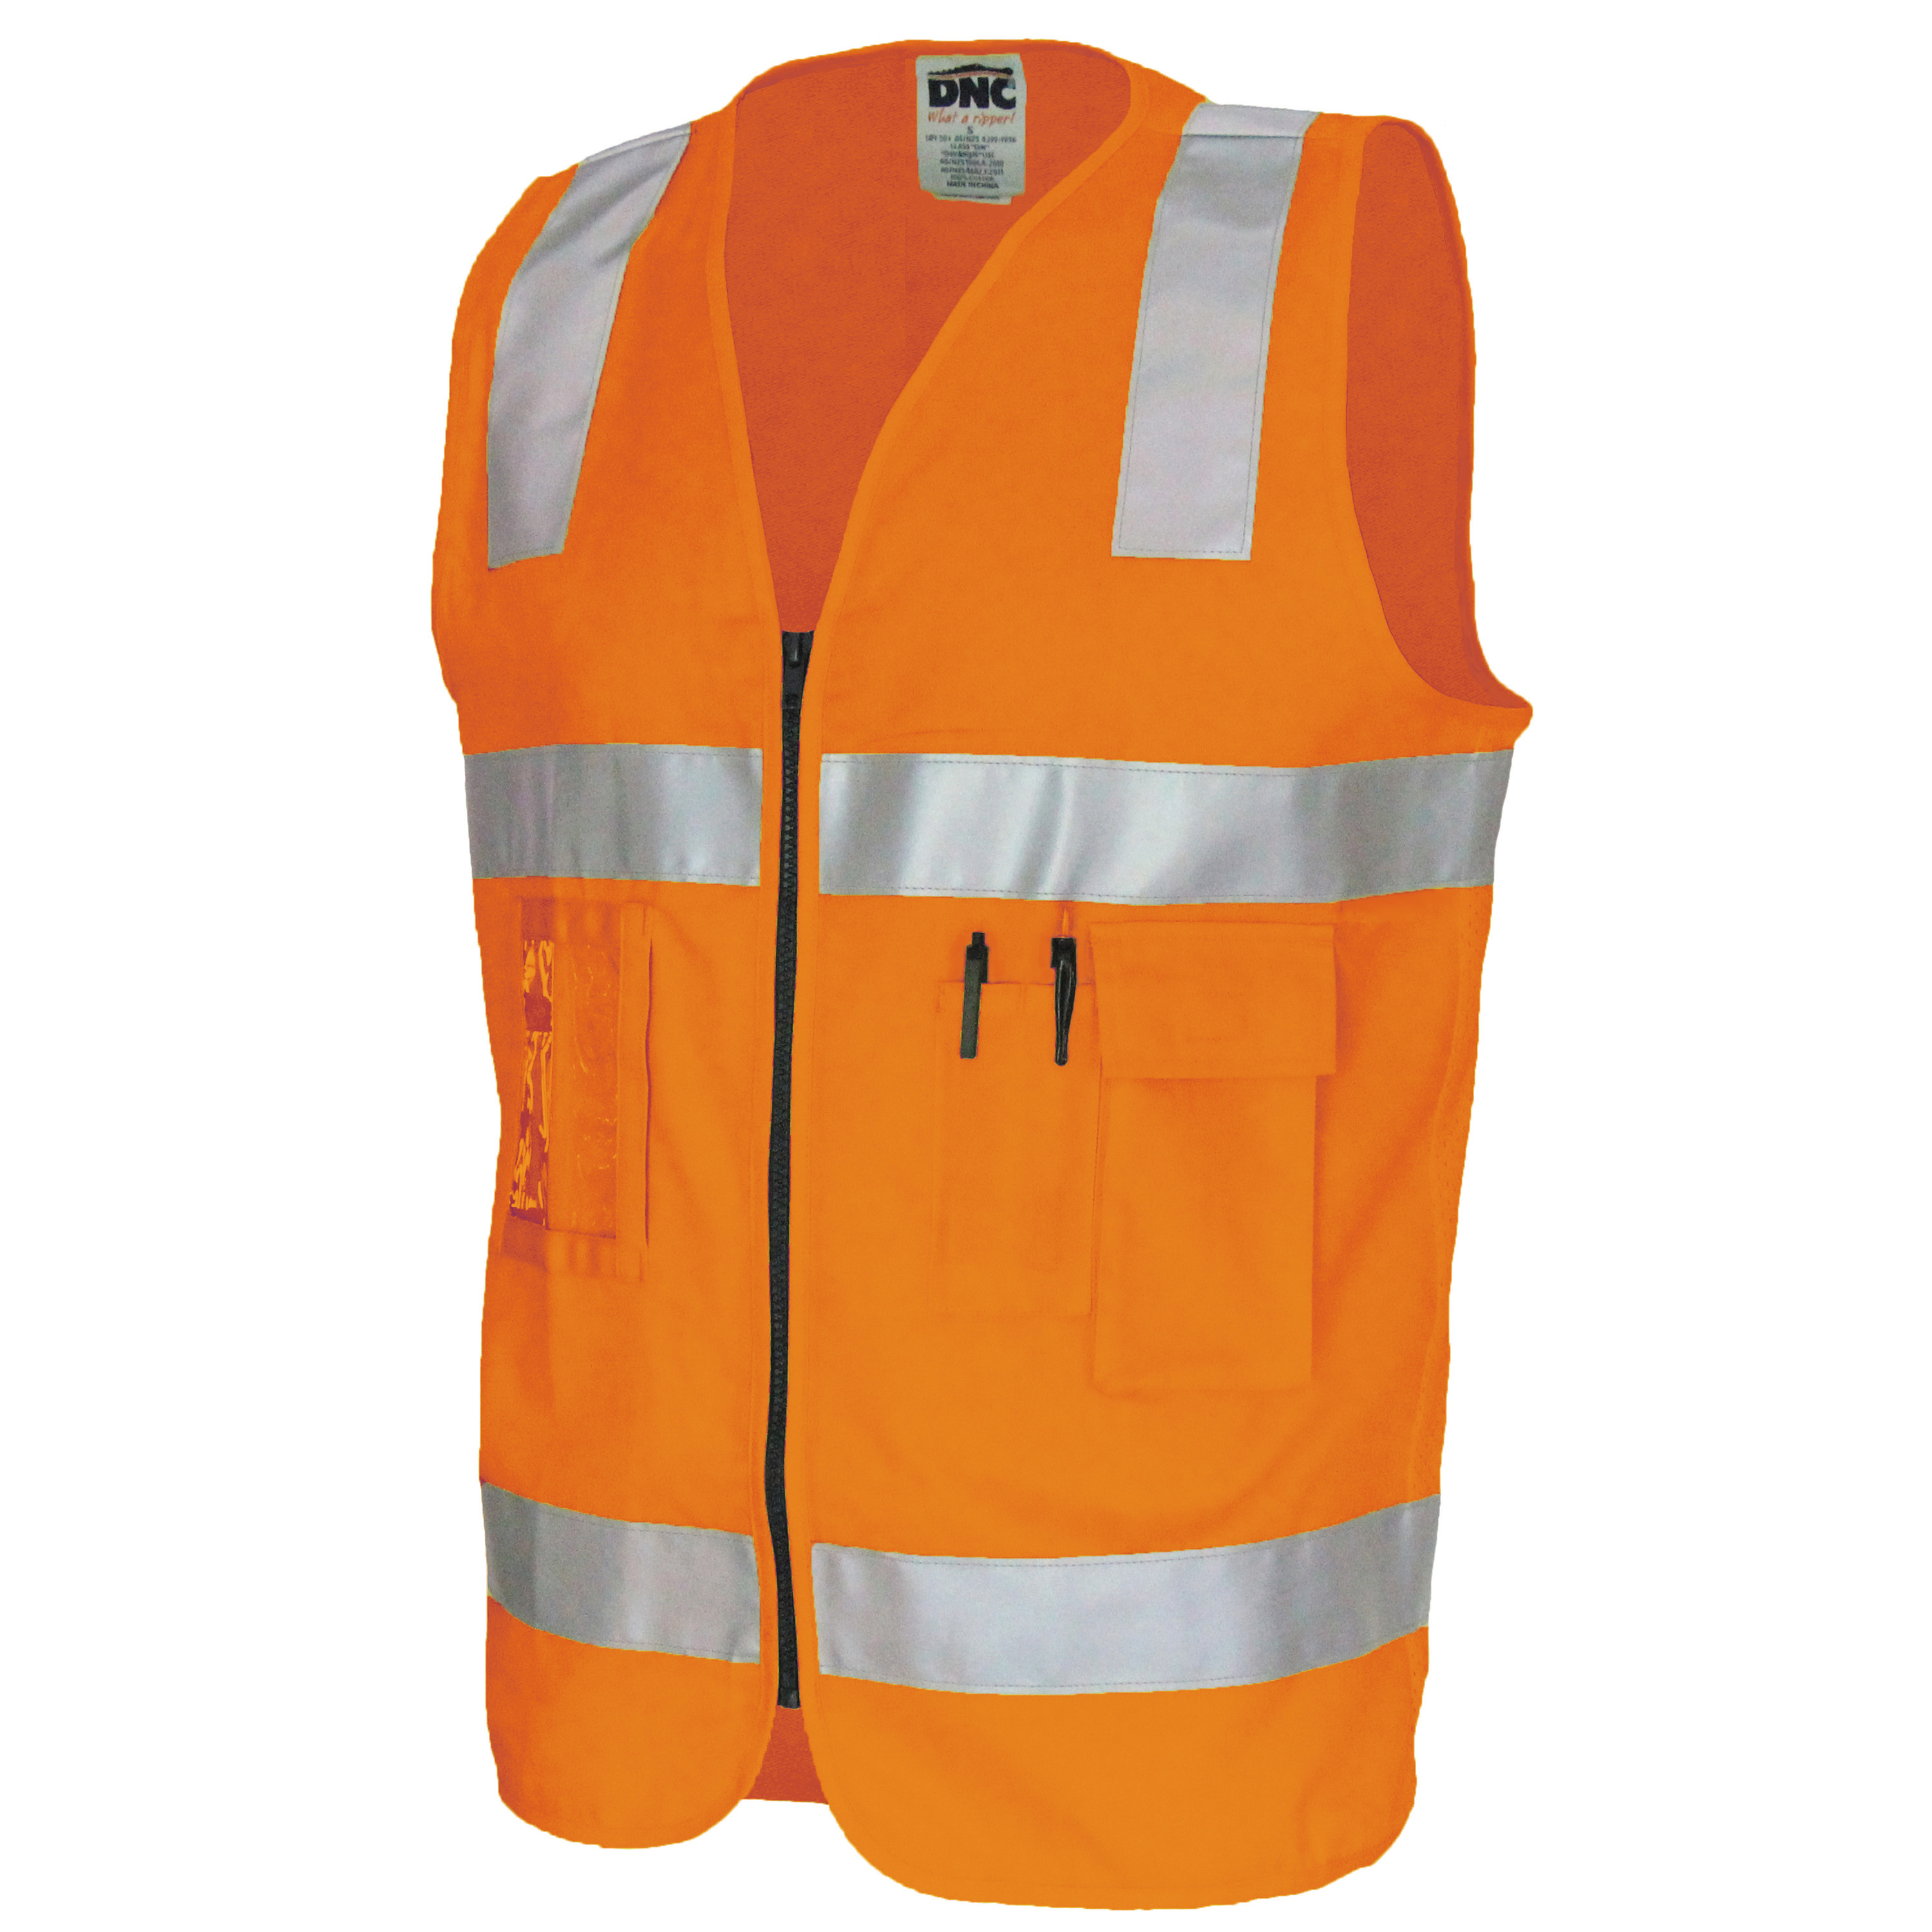 DNC Day-Night Cotton Safety Vests-DNC